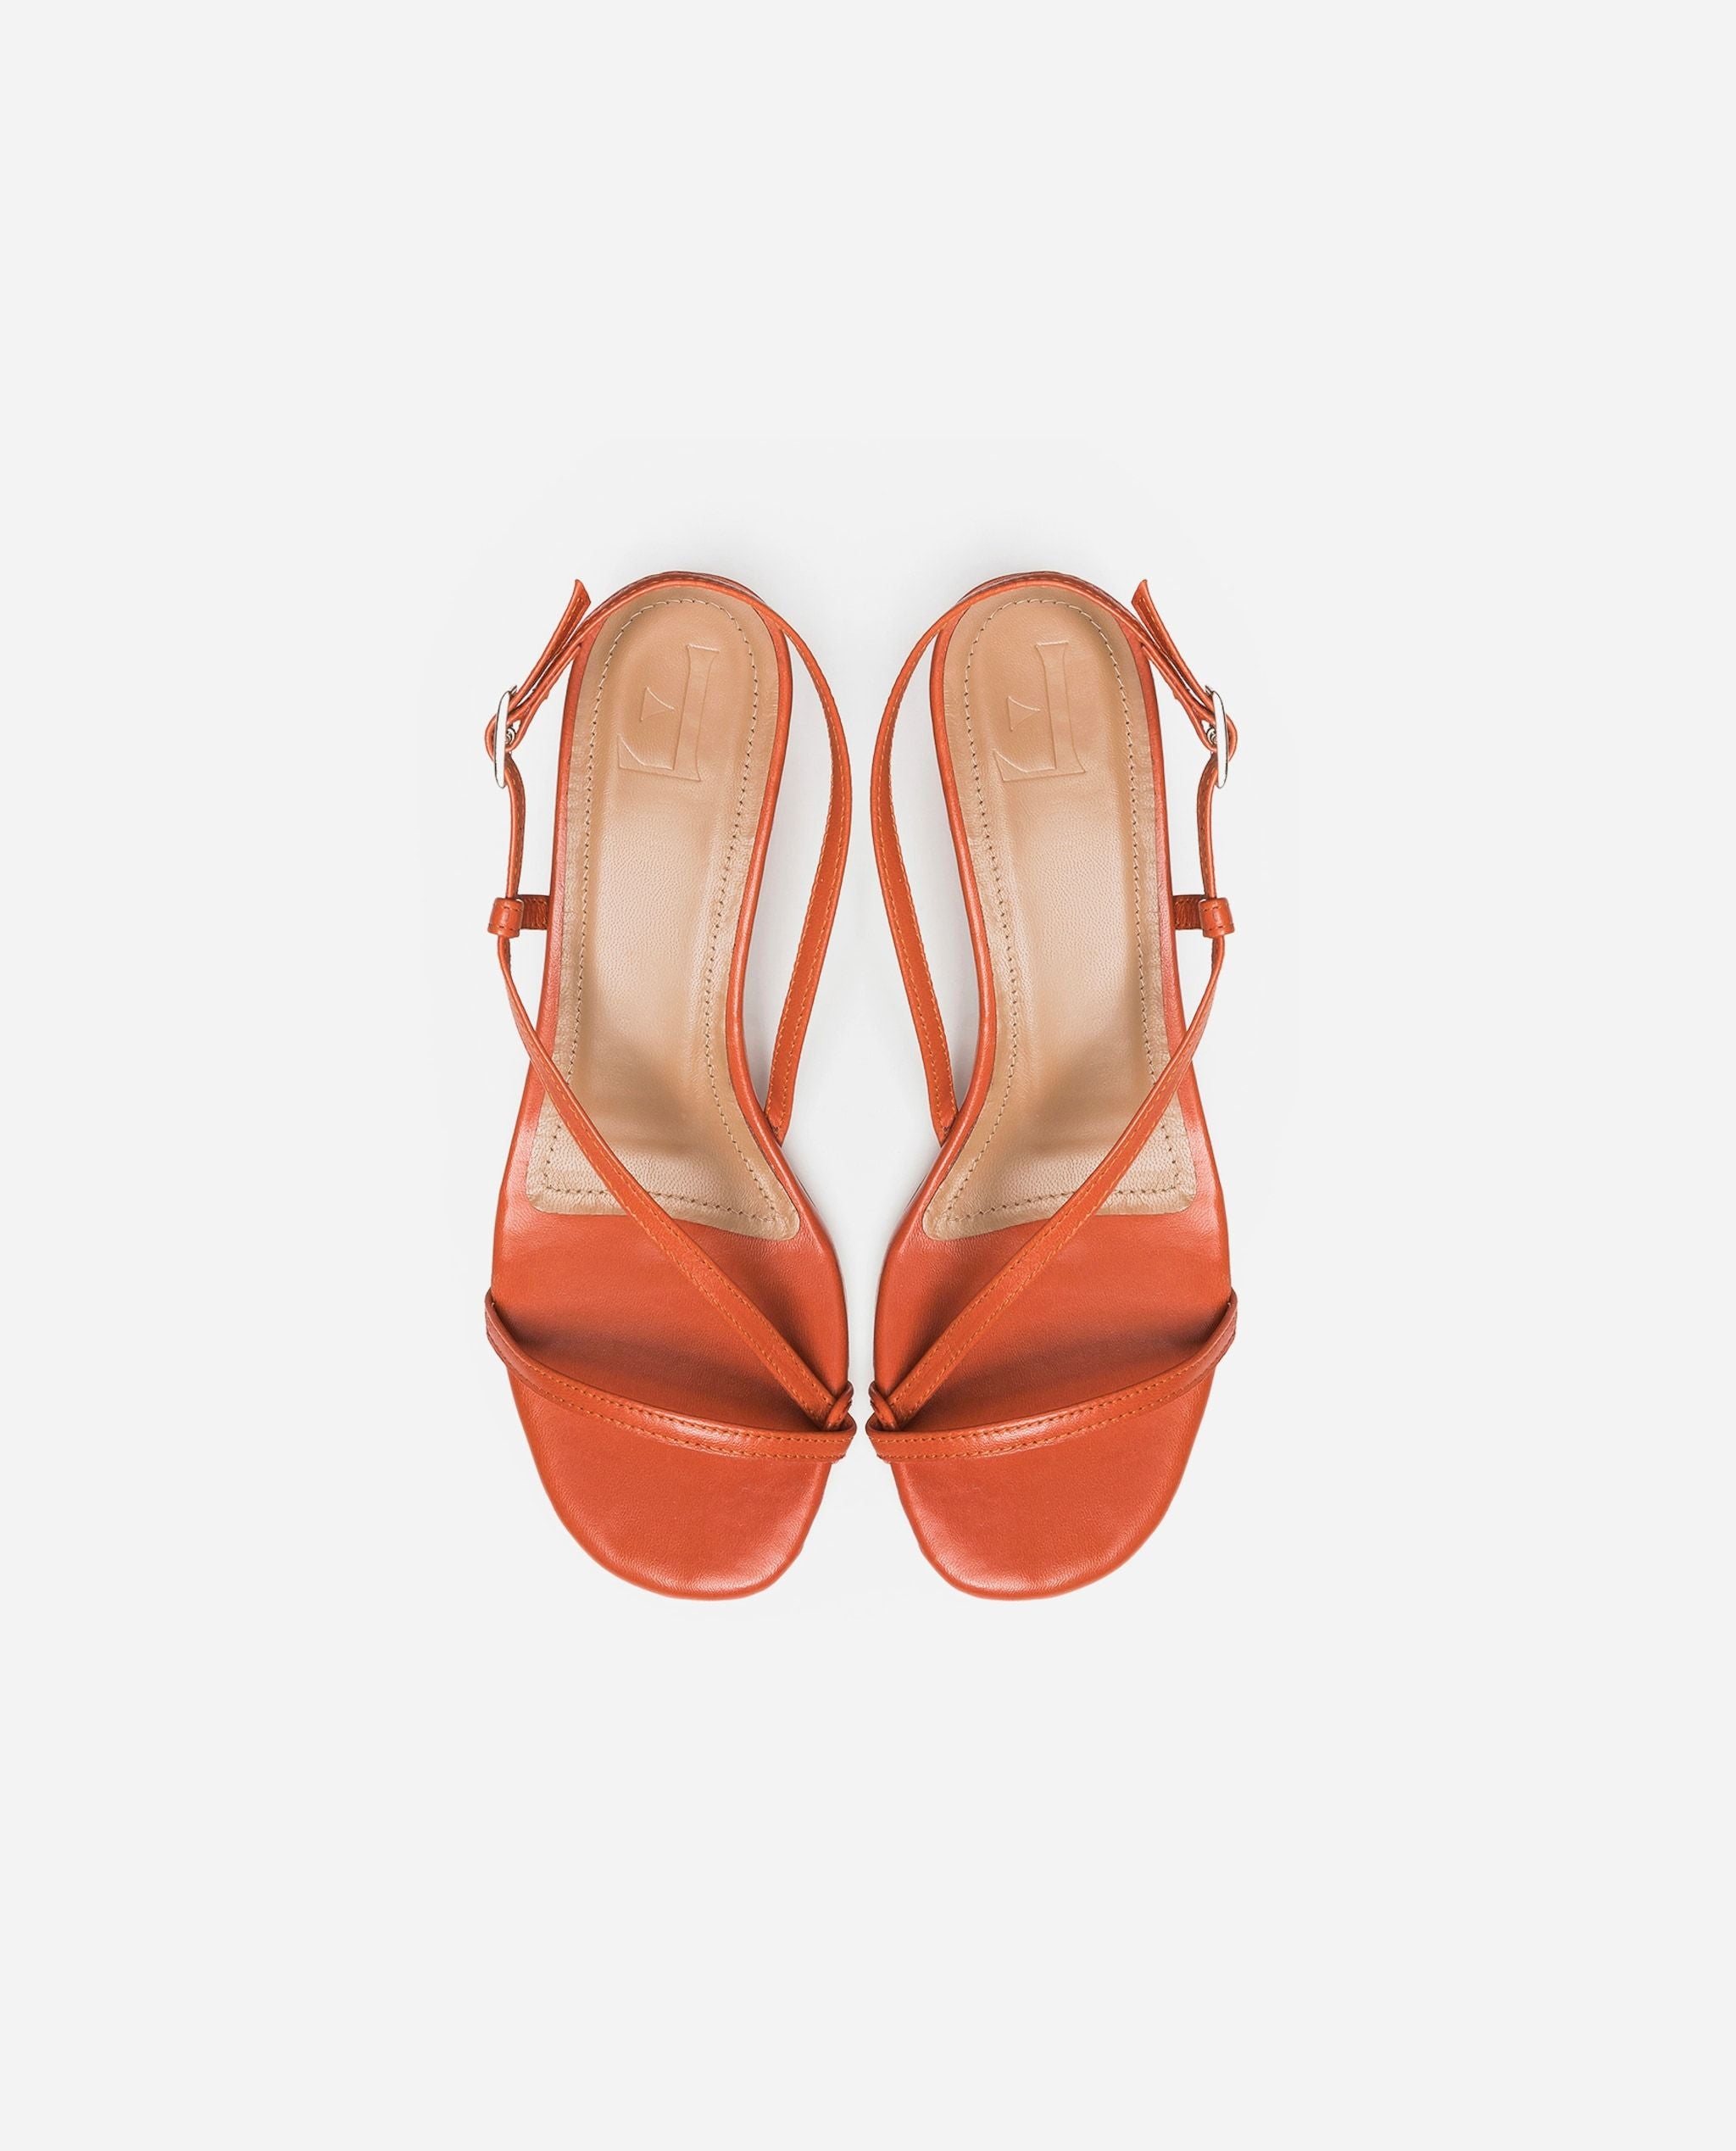 Emma Leather Brick Red Heeled Sandals 20010411501-025 - 4